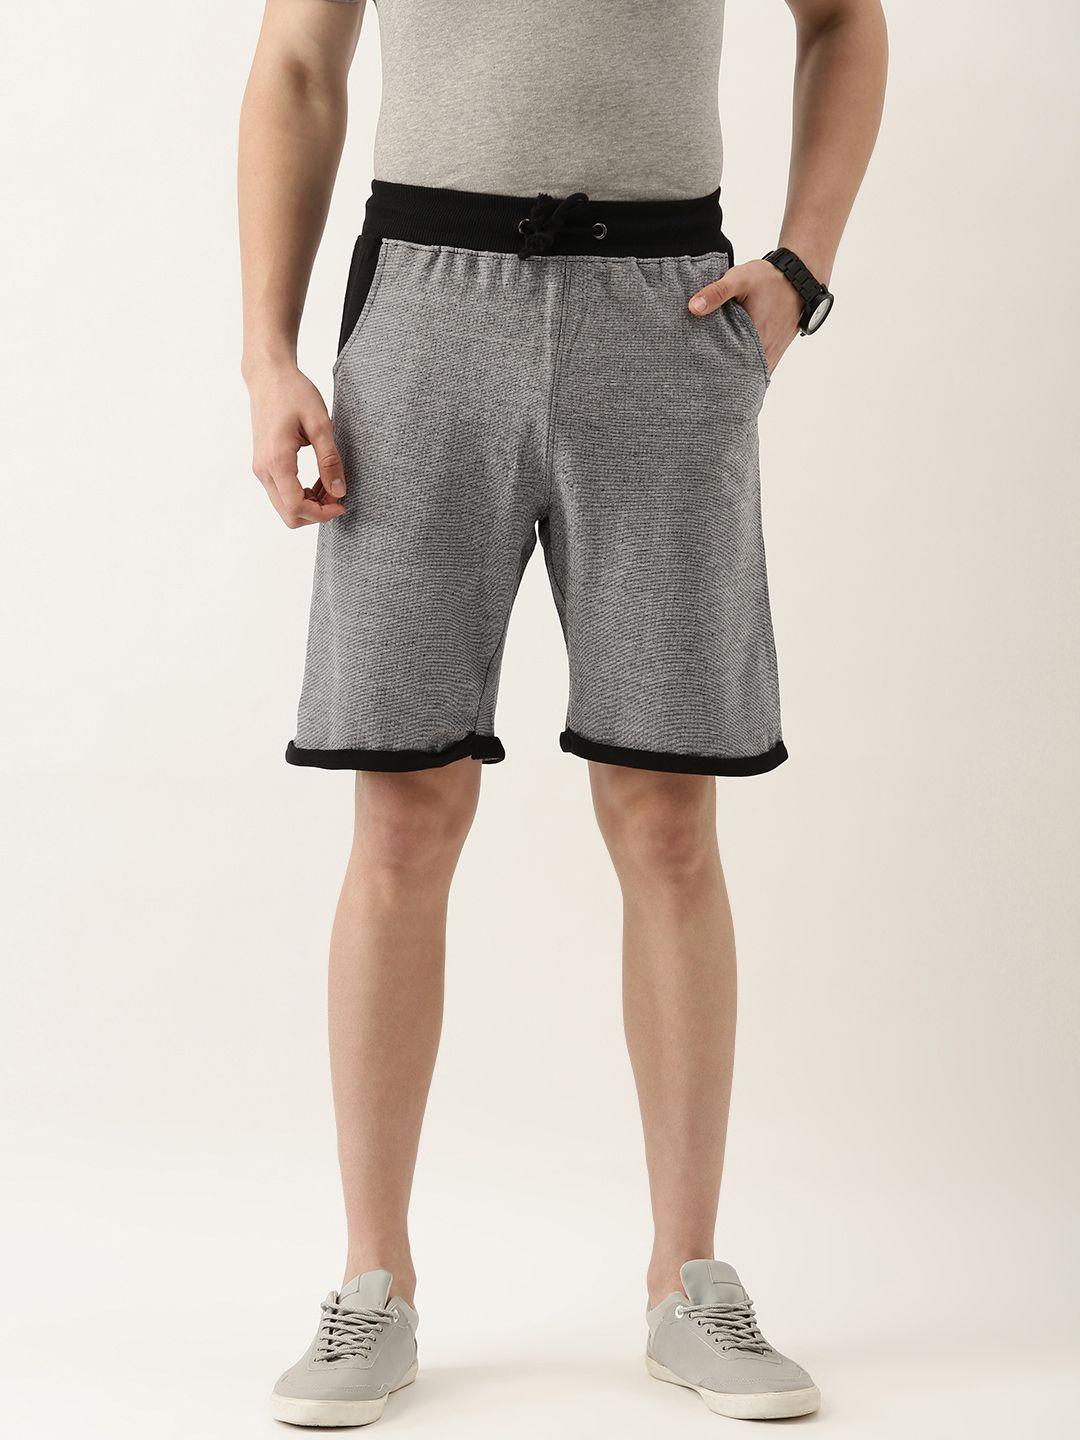 arise men grey solid shorts